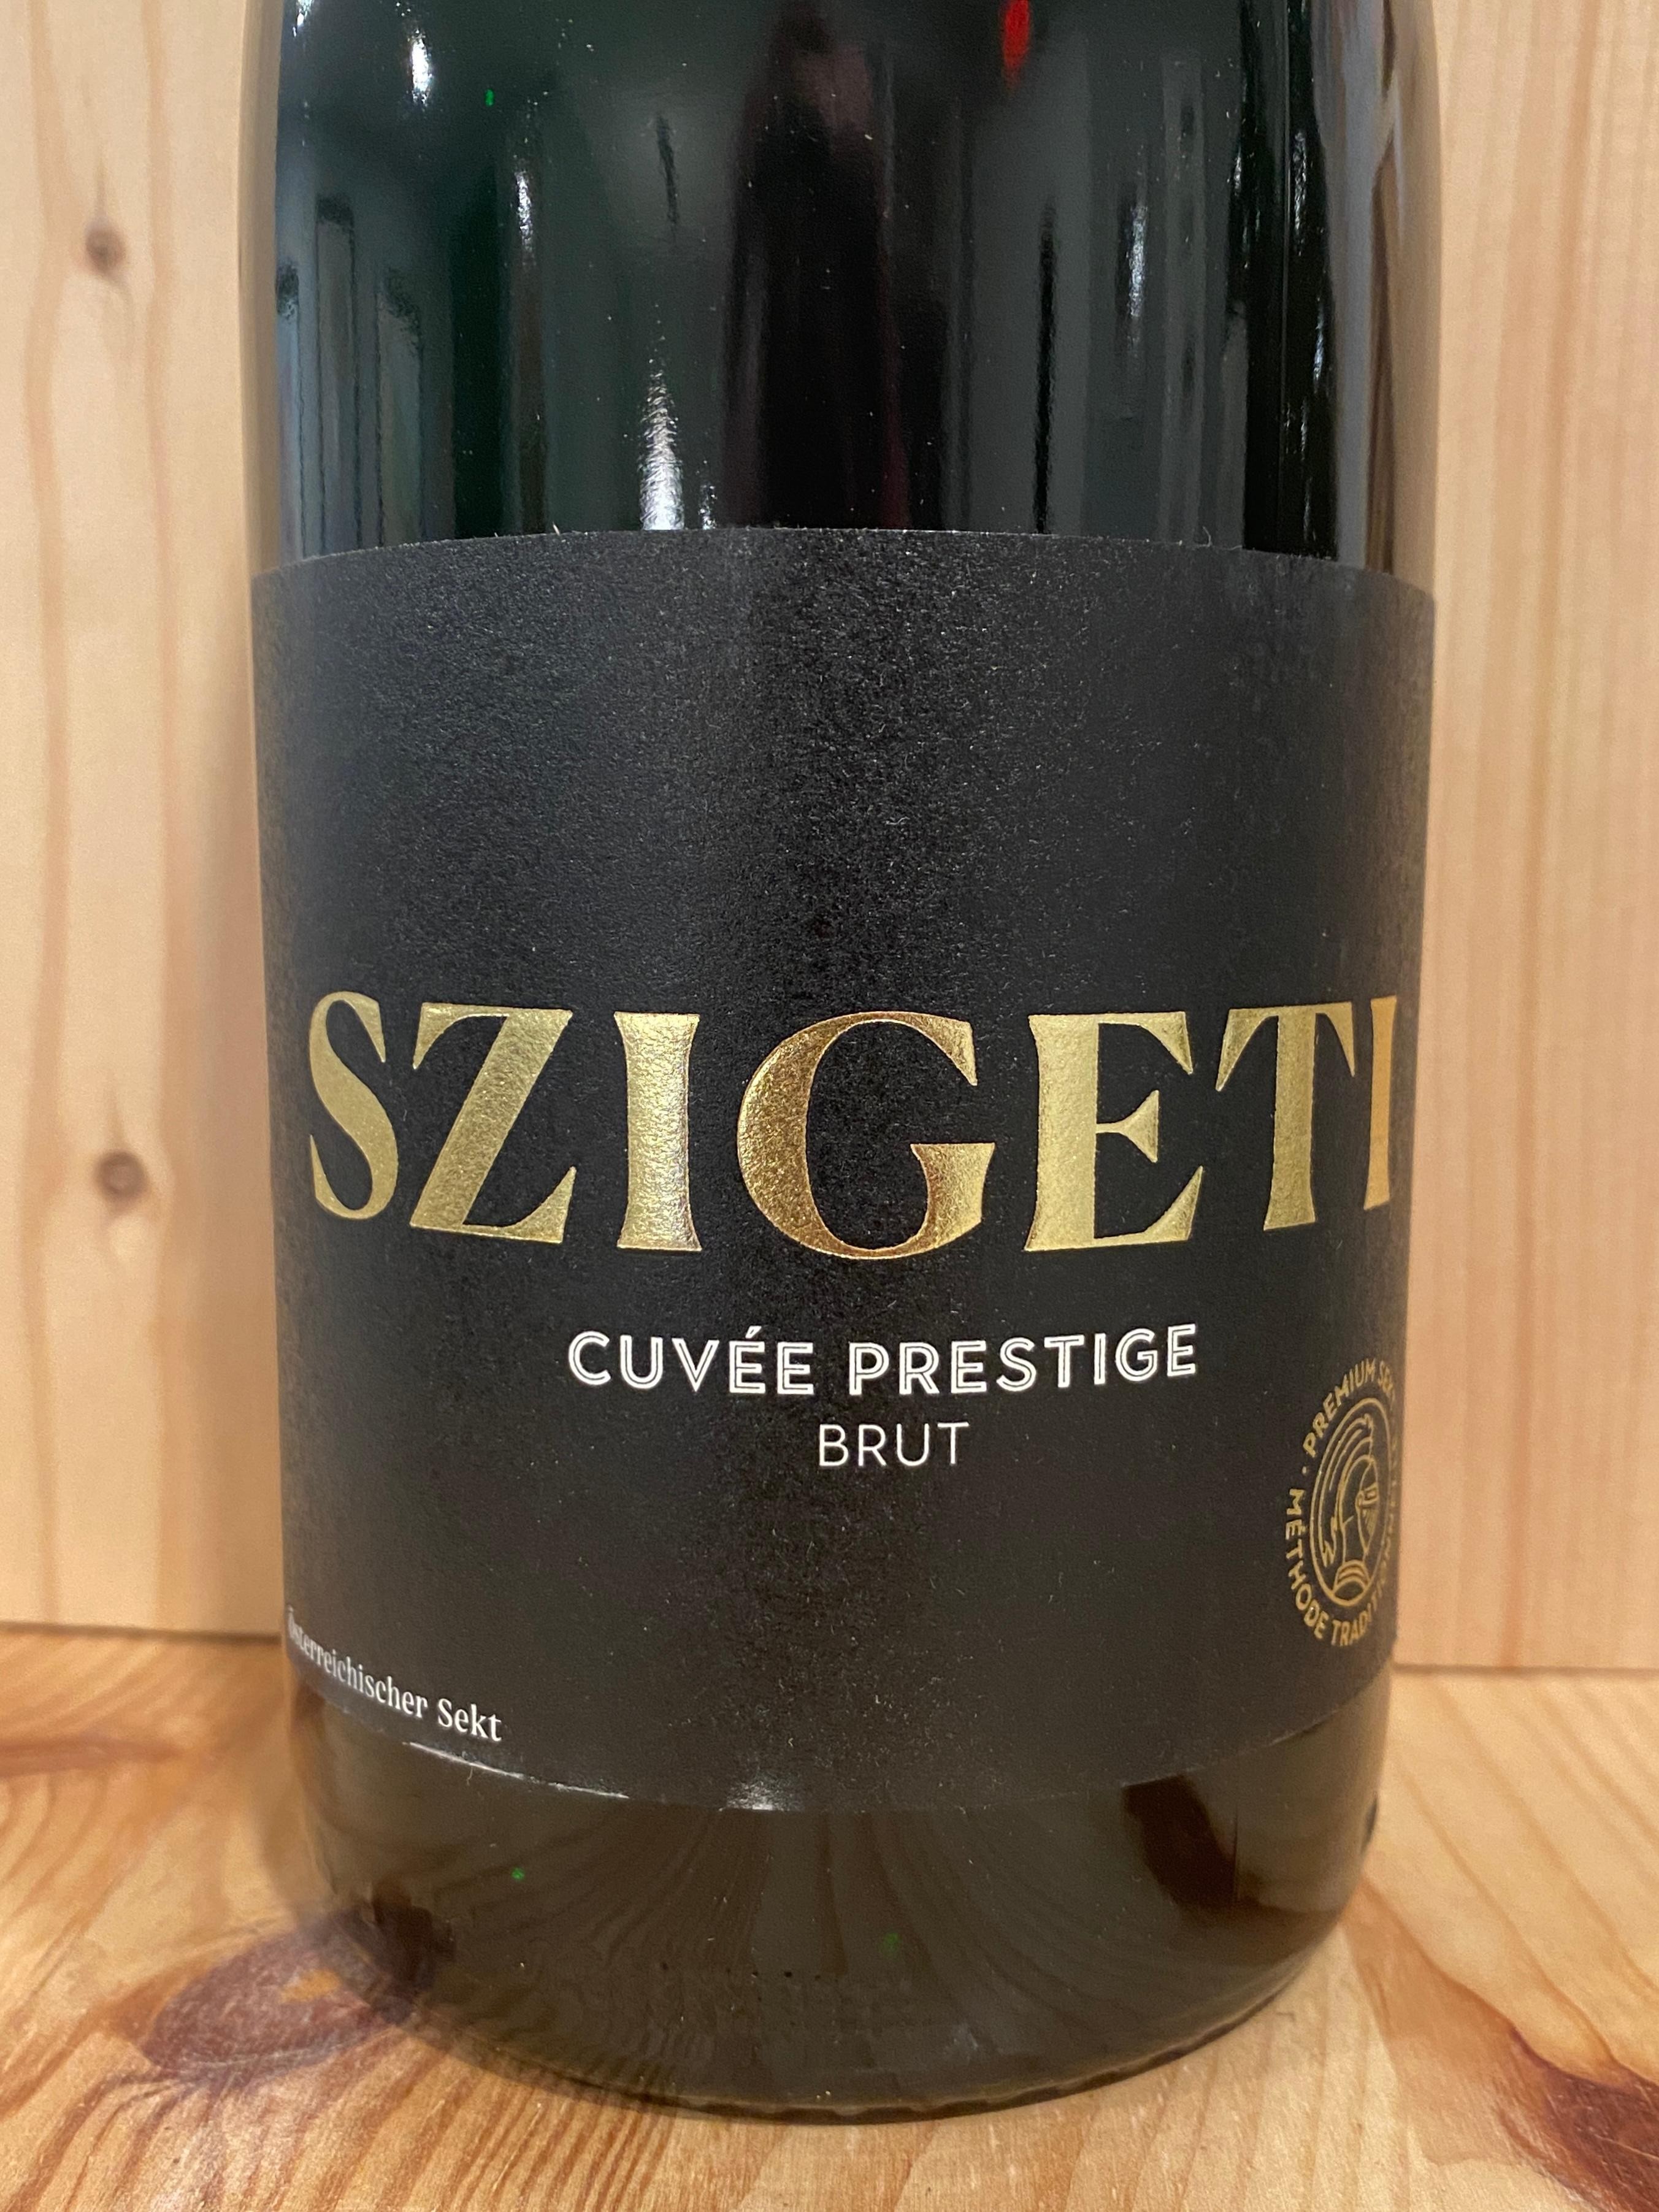 Szigeti "Cuvée Prestige" Brut 2017: Burgenland, Austria